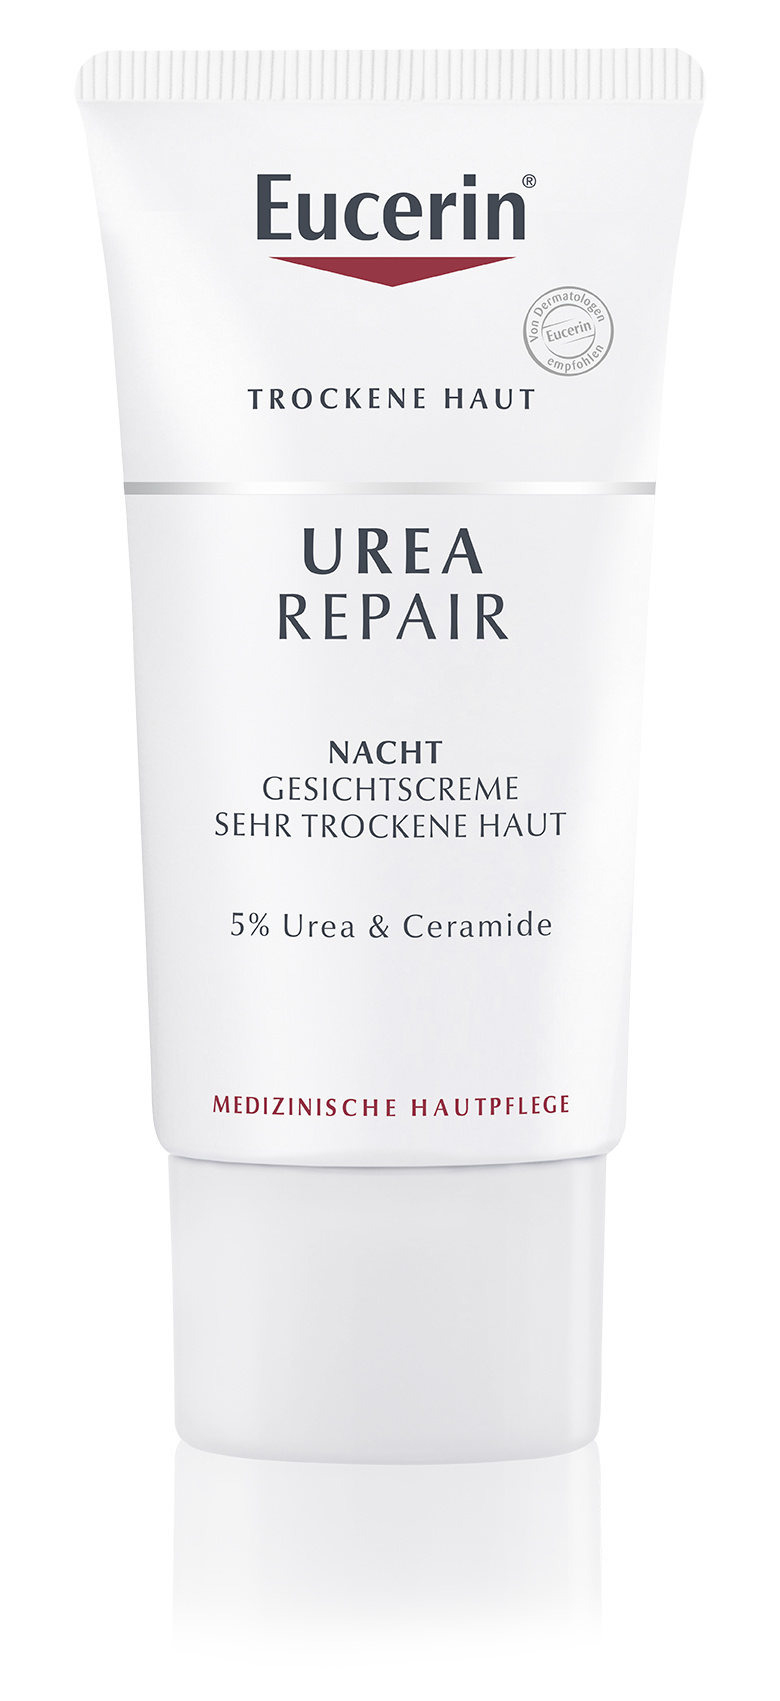 Eucerin Urea Repair Gesichtscreme 5% Nacht (50 ml)